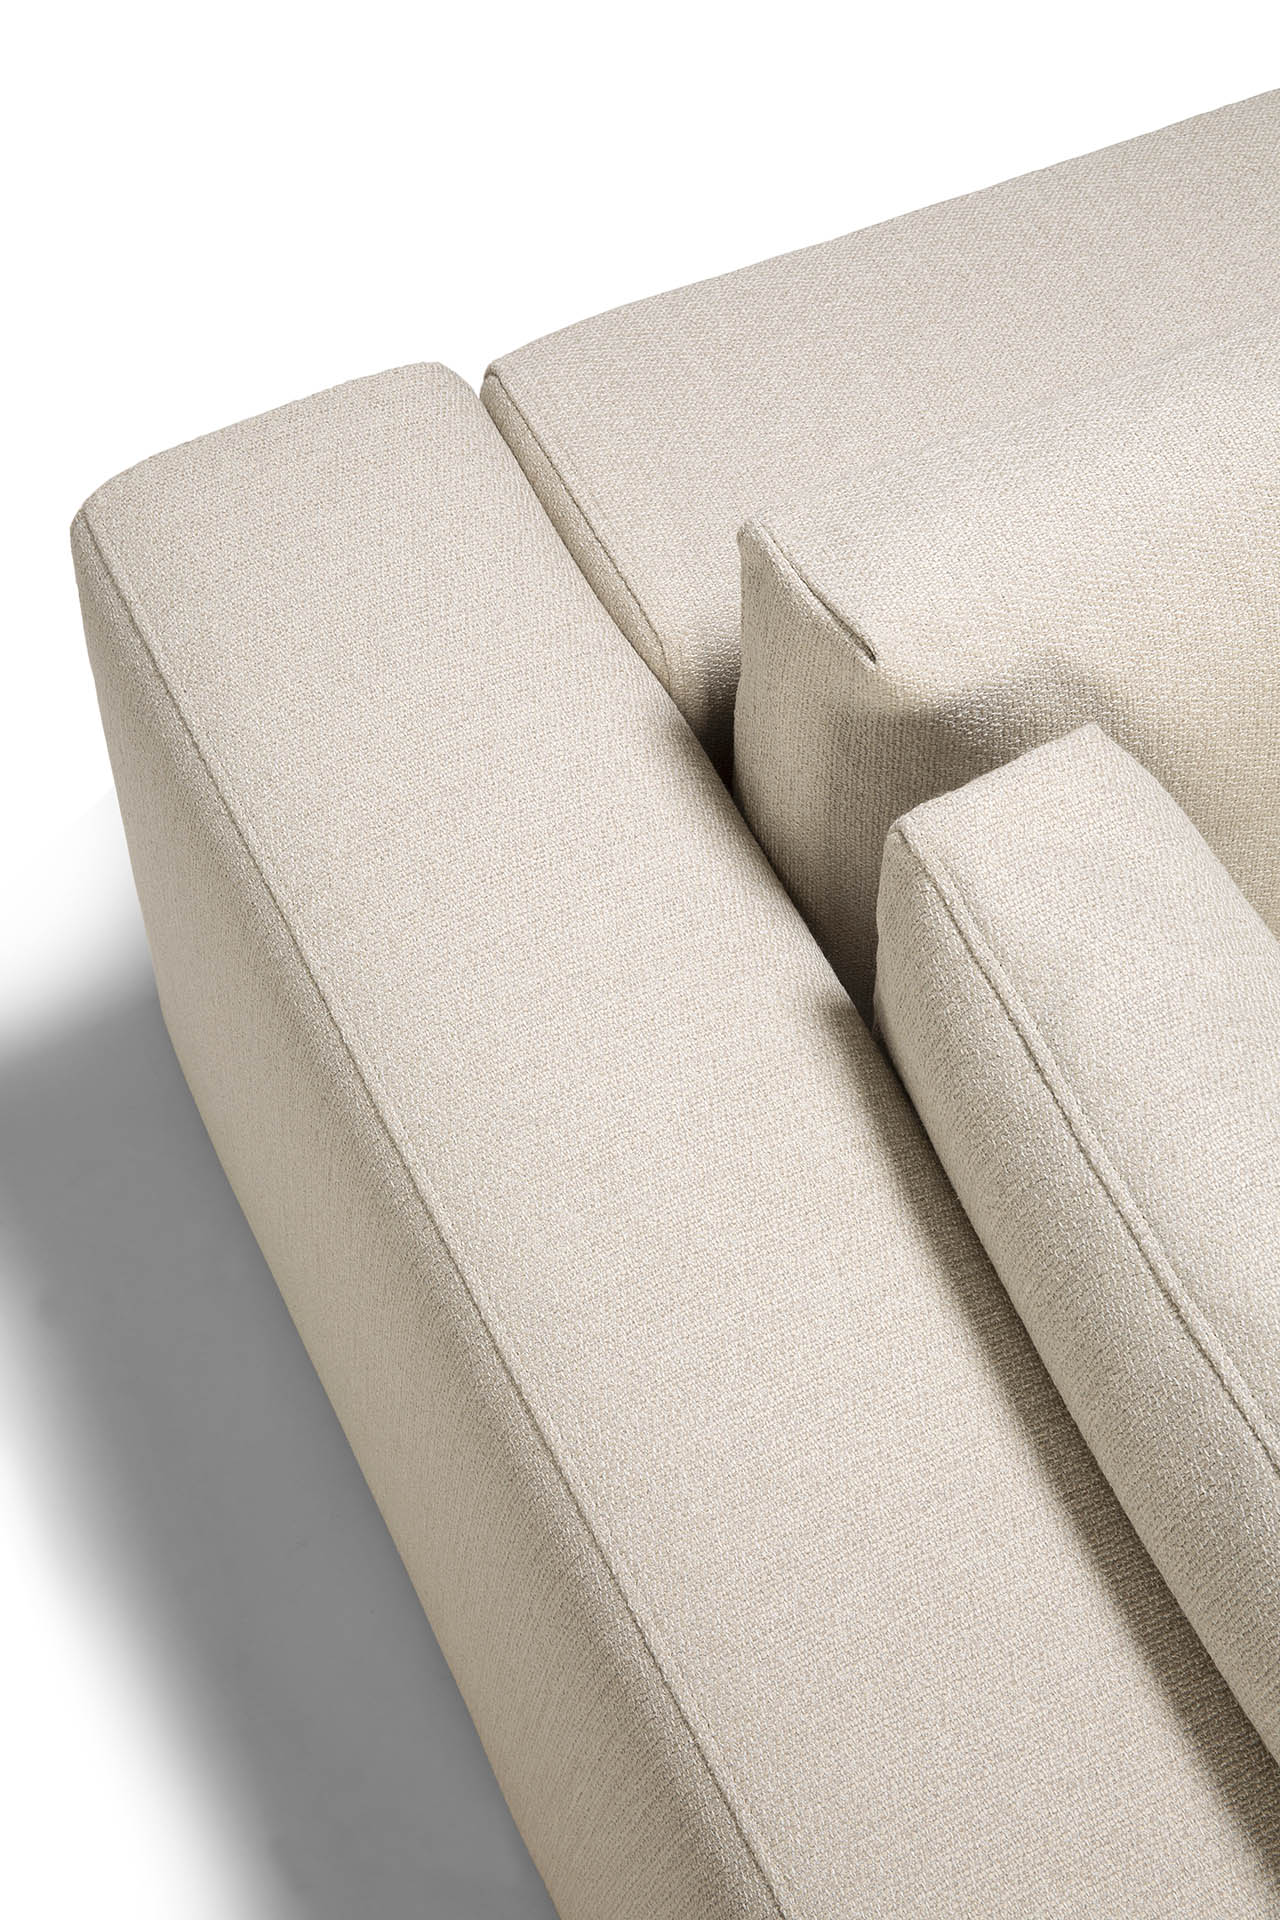 Mellow Corner Eco Fabric Sofa, Off White